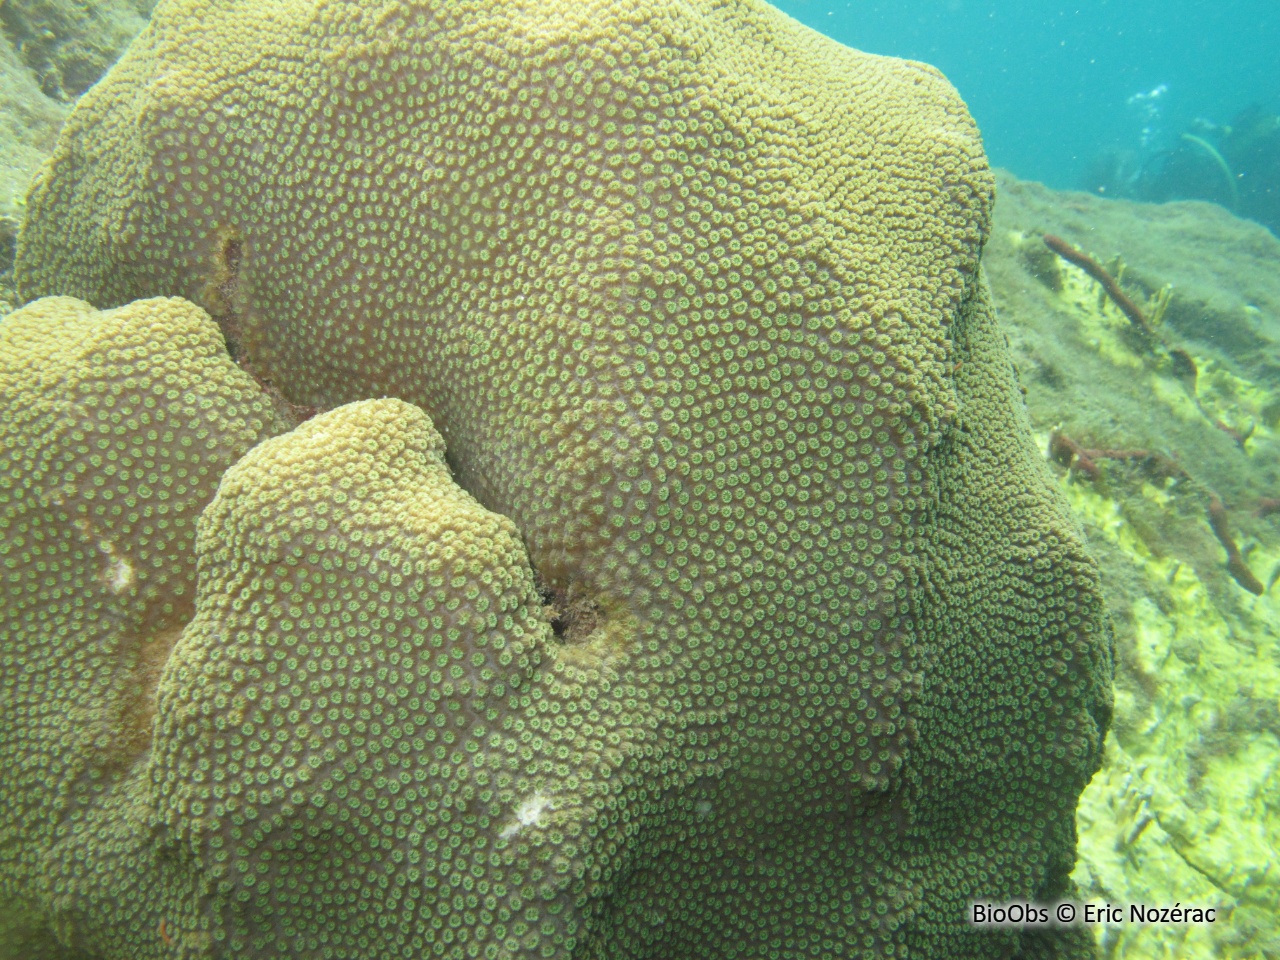 Corail étoilé massif - Orbicella annularis - Eric Nozérac - BioObs